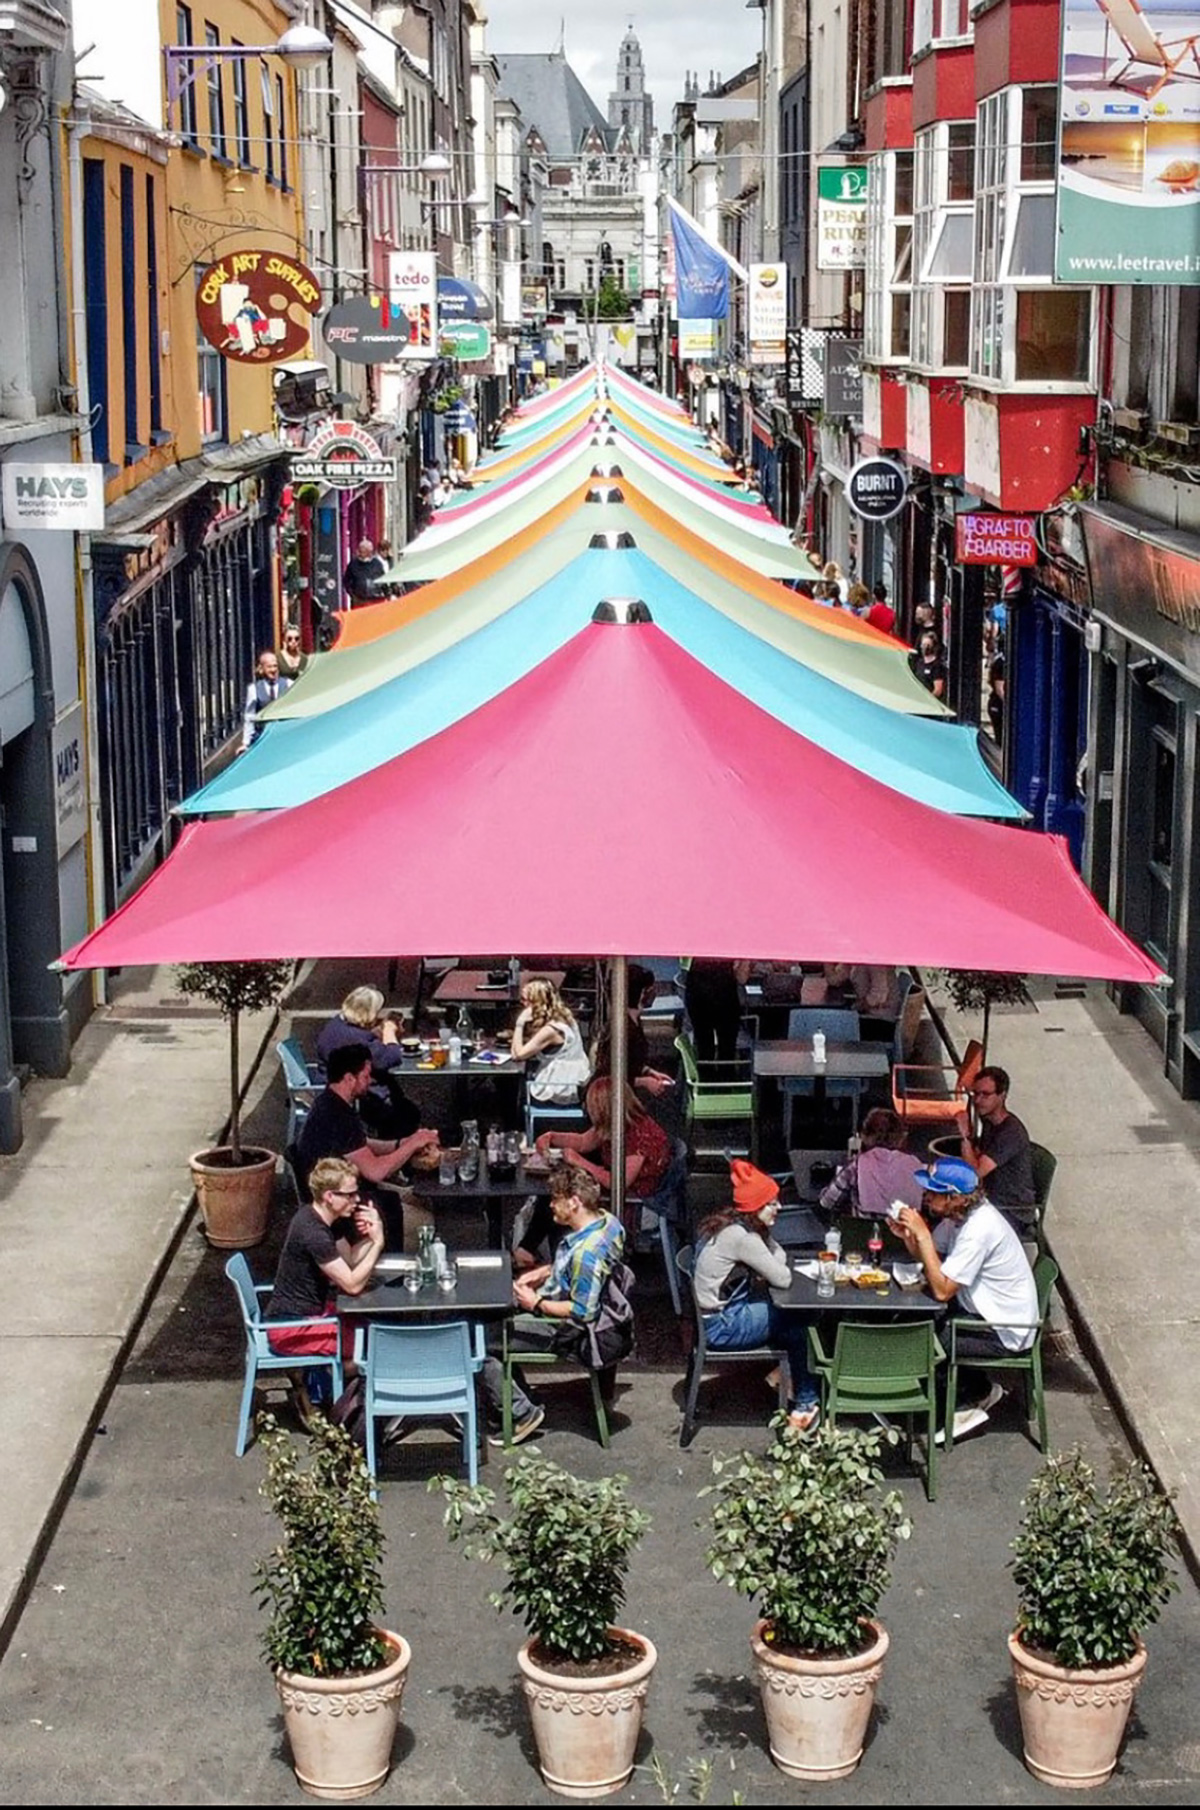 Commercial parasols - multicoloured rectangular shape